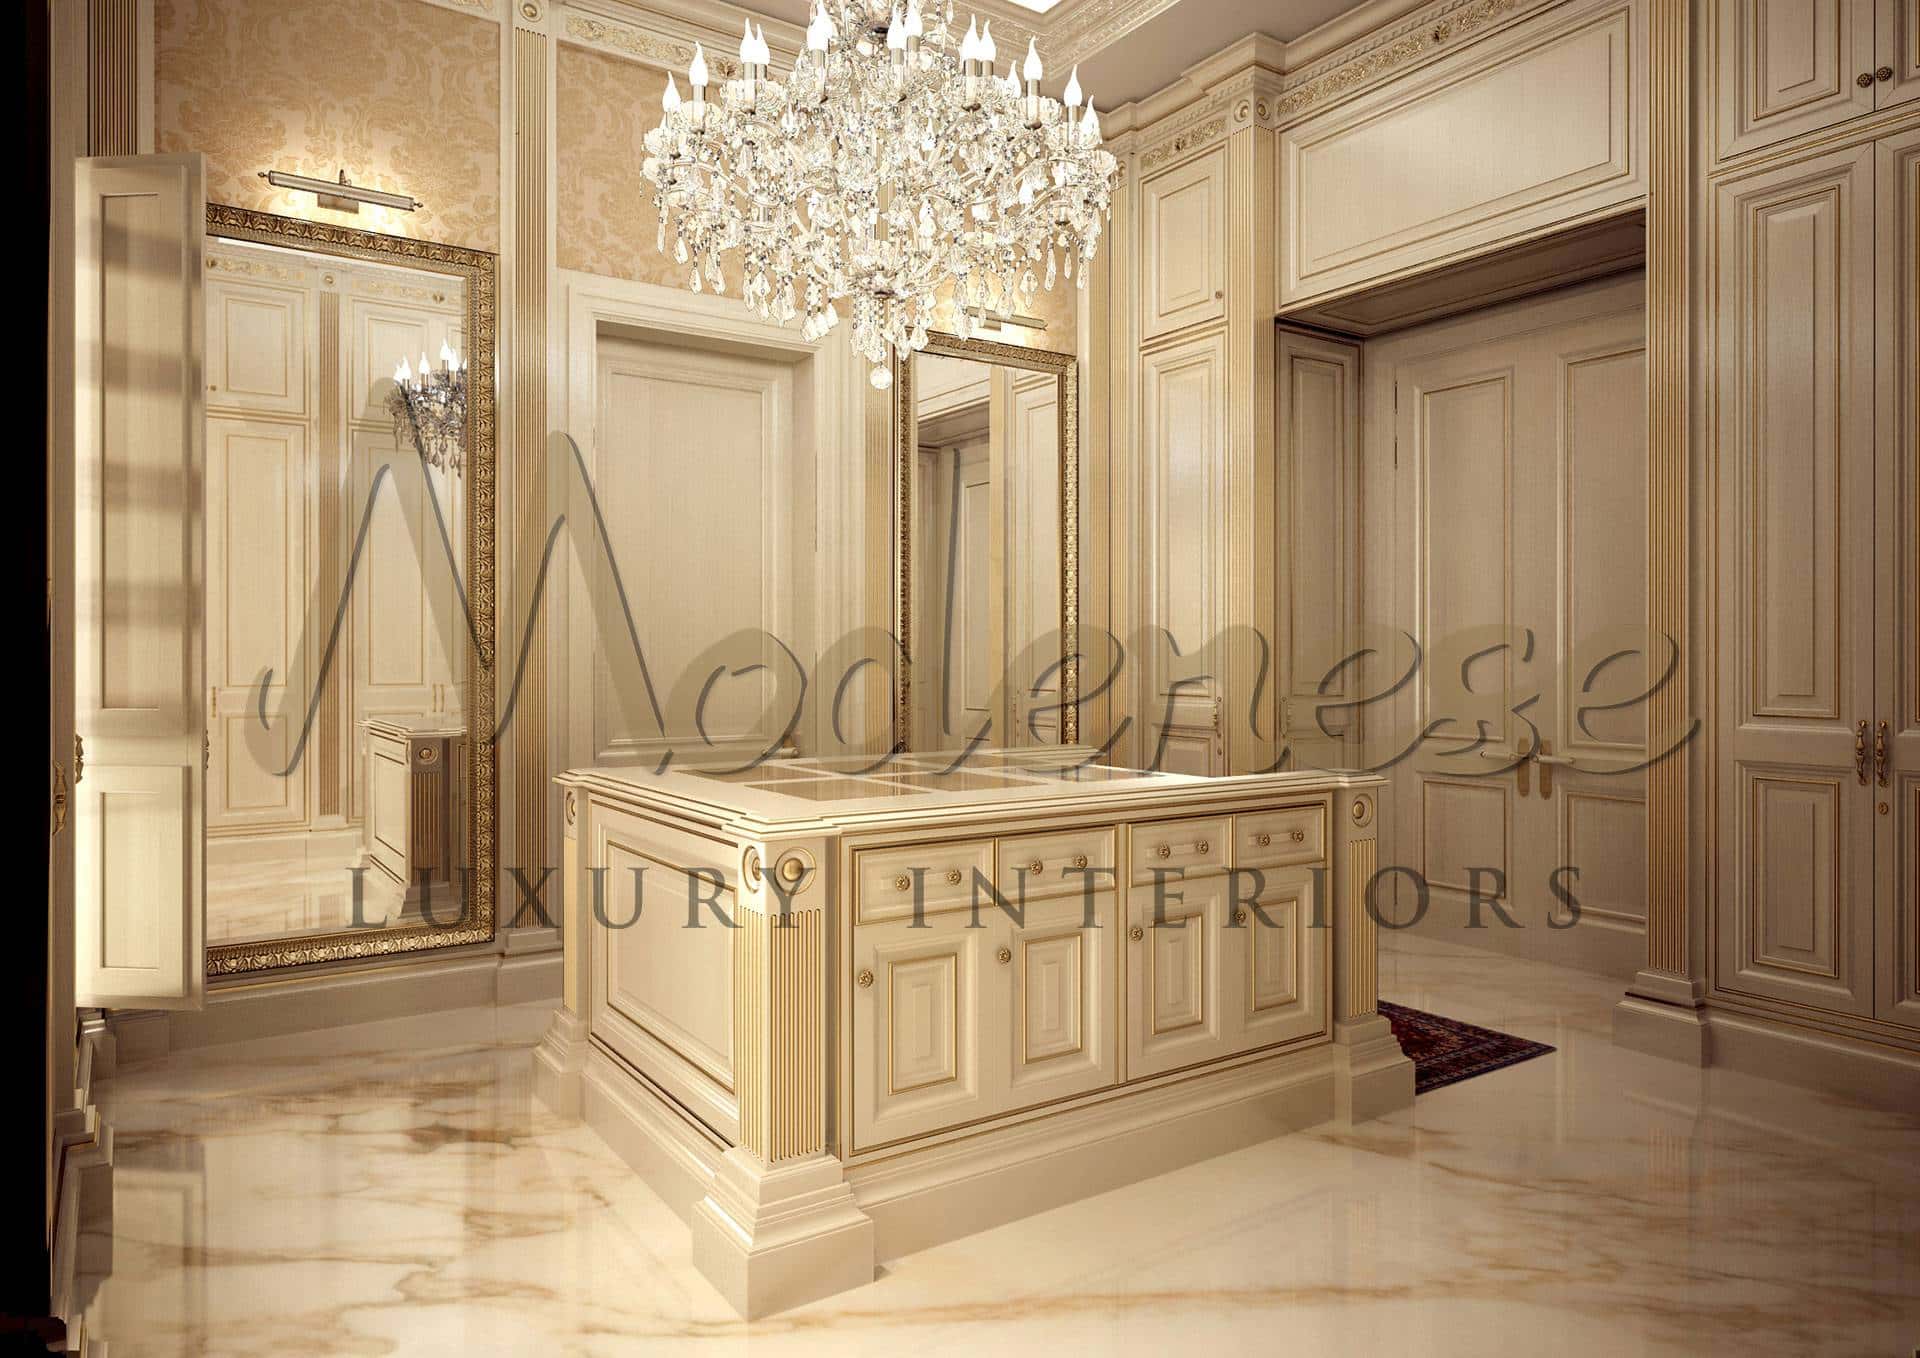 https://modeneseinteriors.com/uploads/2020/06/32-baroque-style-walk-in-closet-custom-made-furniture-exclusive-handmade-italian-artisanal.jpg